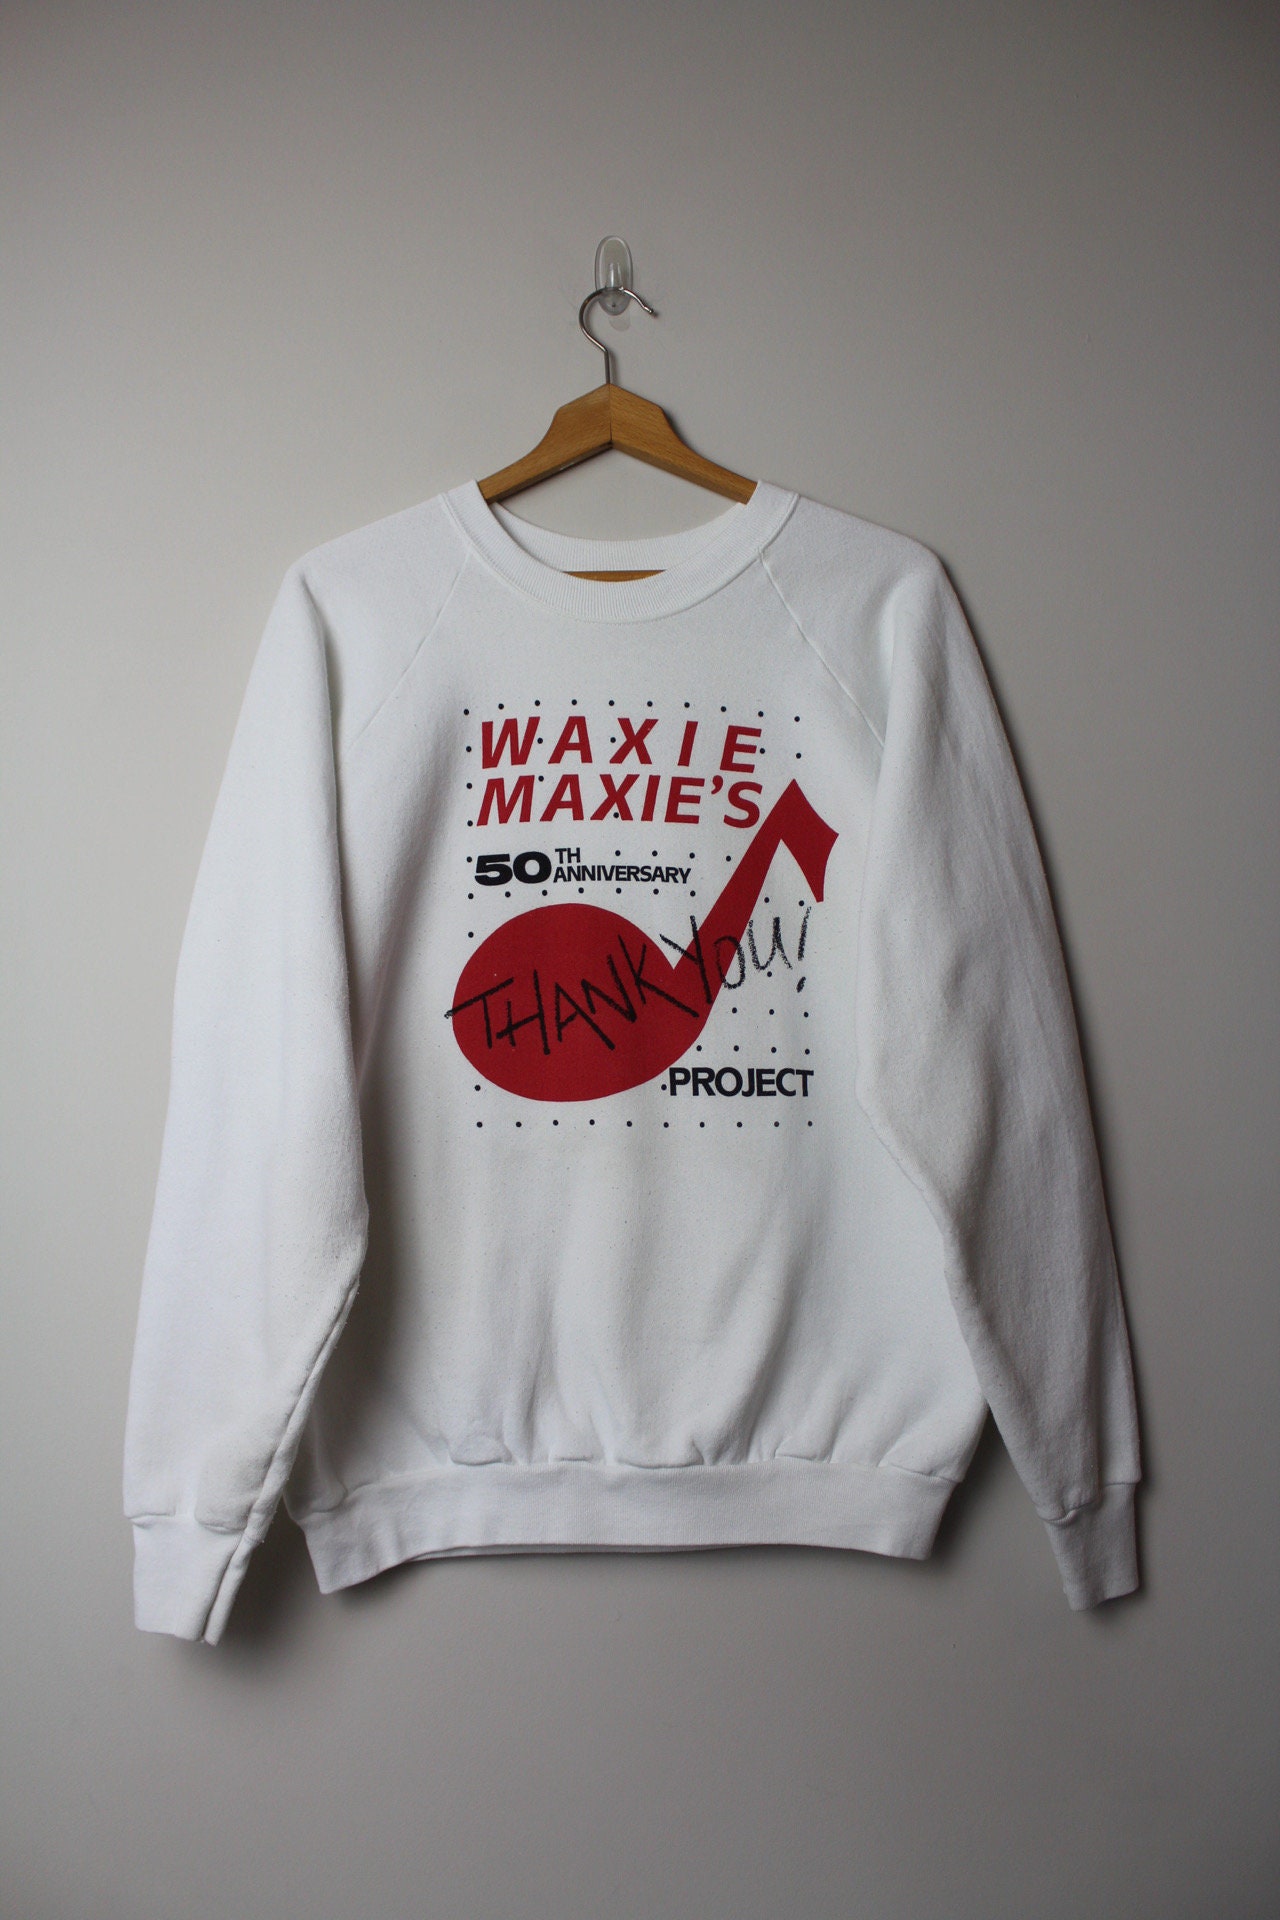 Vintage Waxie Maxie's Record Store 50th Anniversary Graphic Sweatshirt 